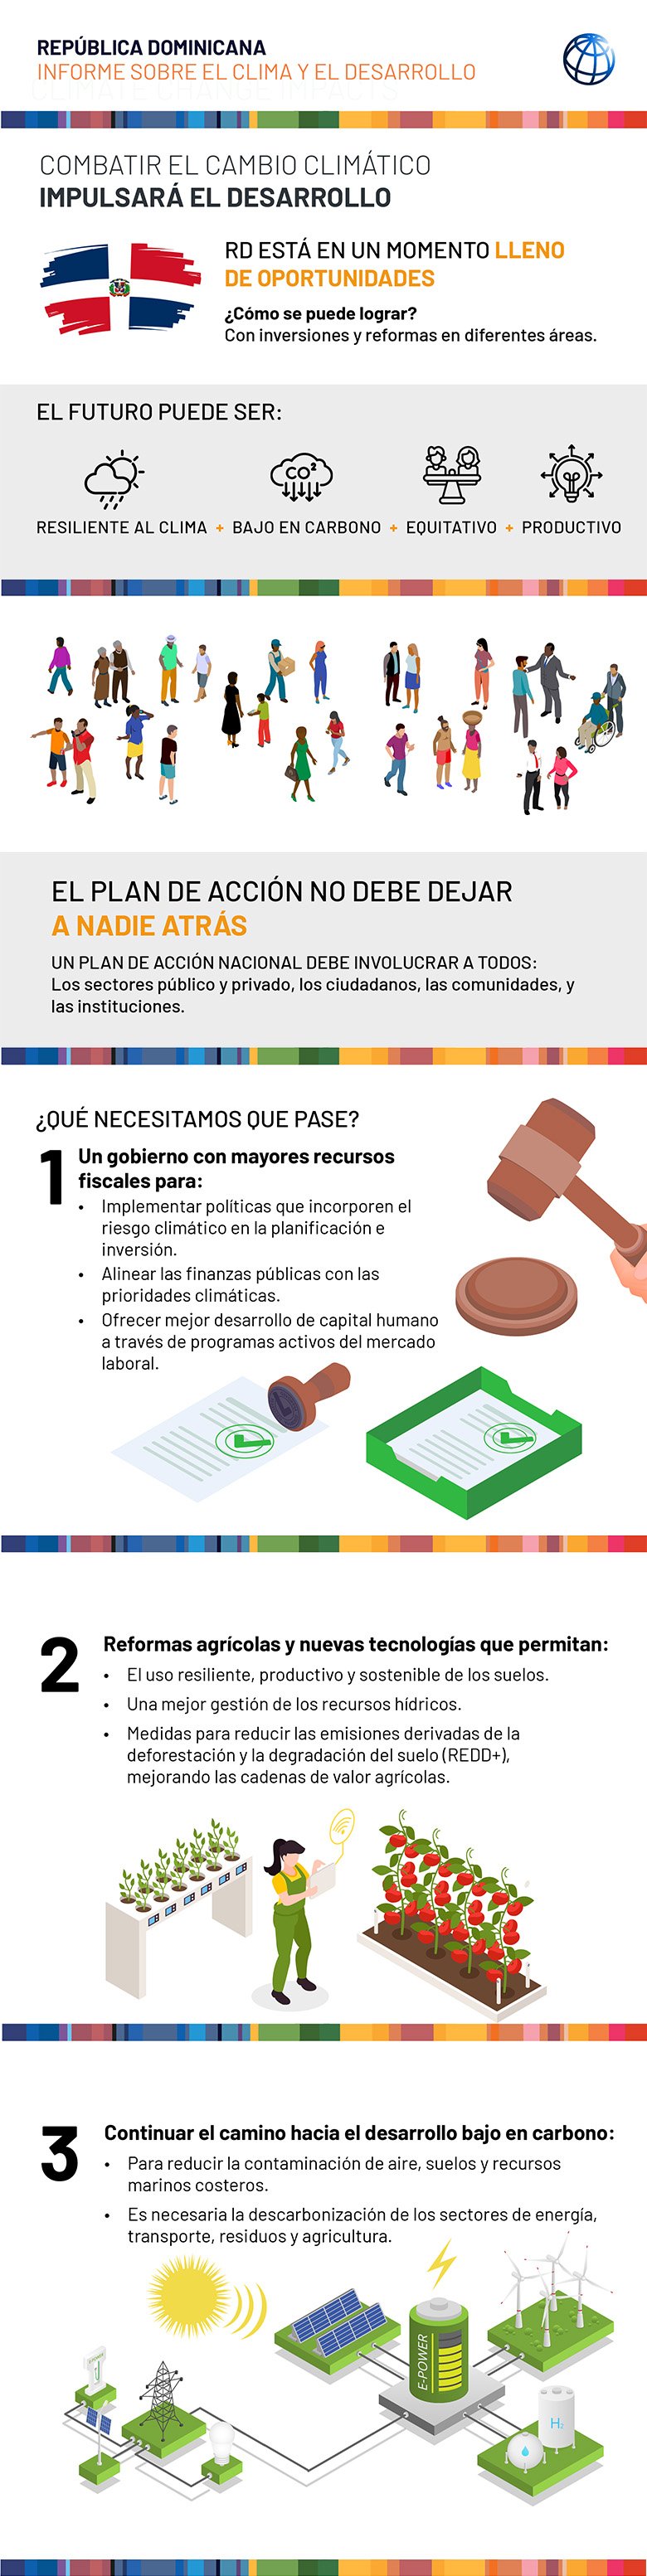 DRCCDR Infographic 4 Spanish